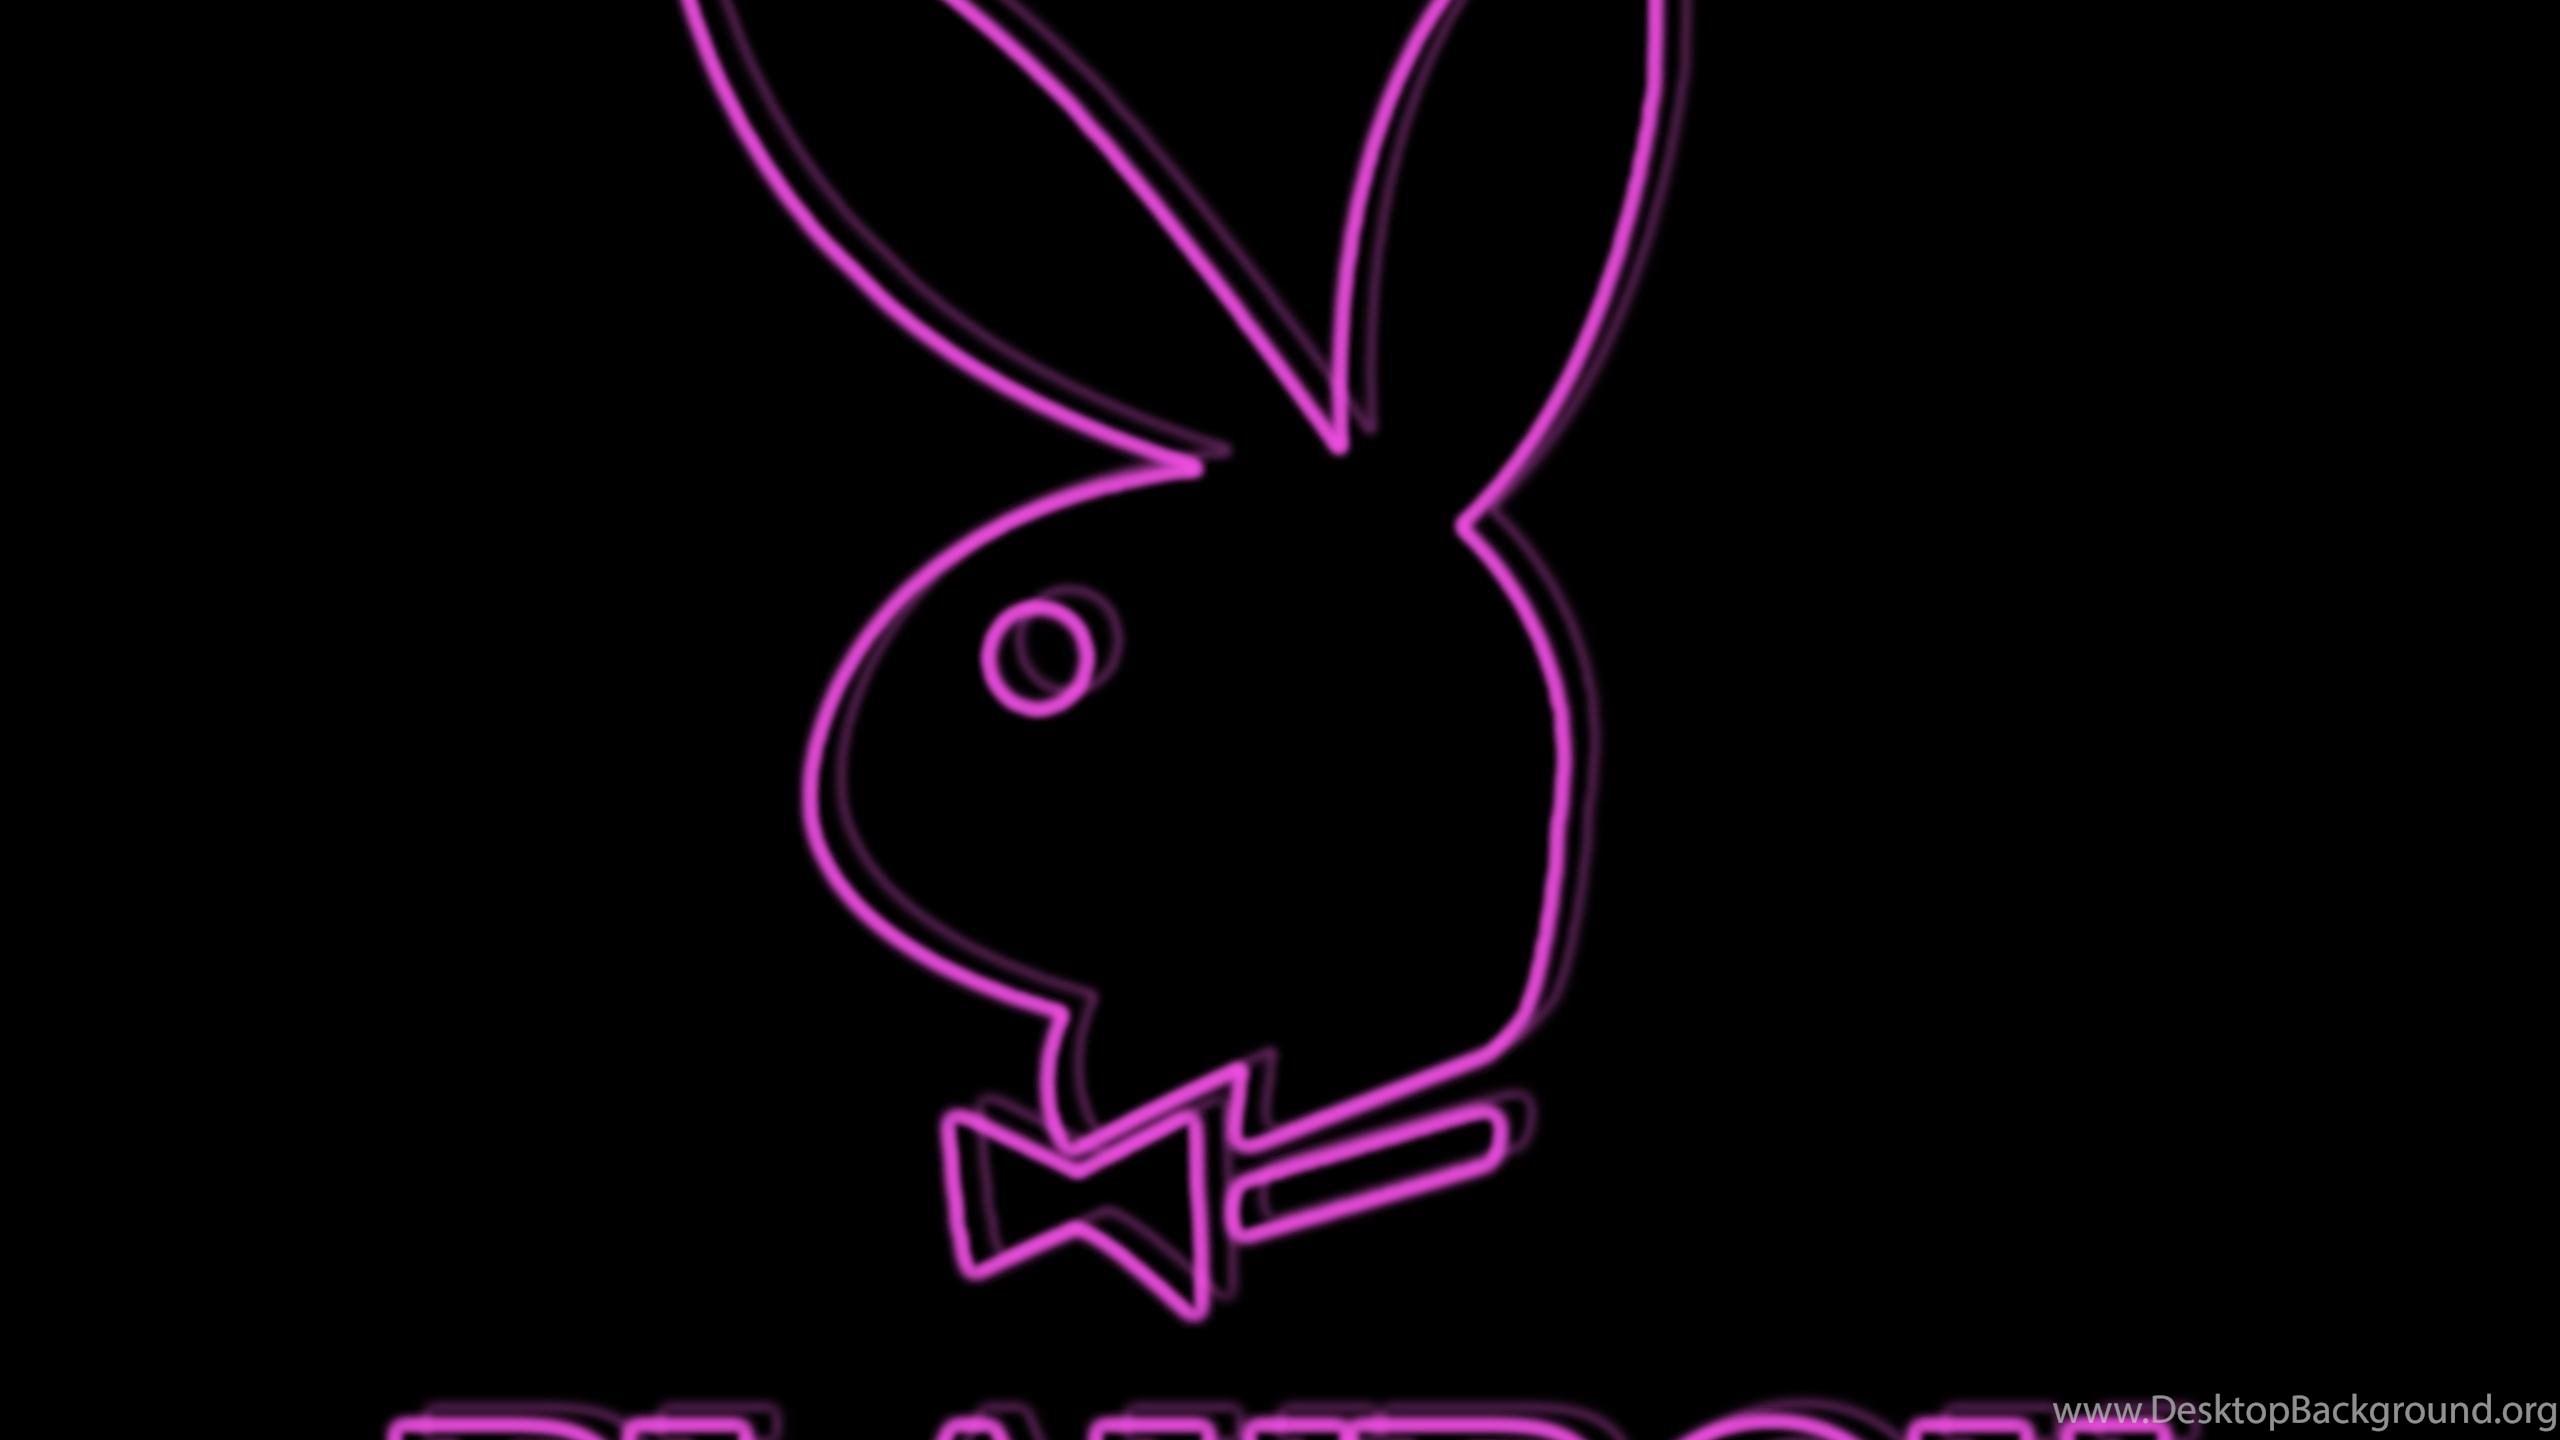 32_mobile-phone_wallpapers, Playboy logo wallpaper designs …